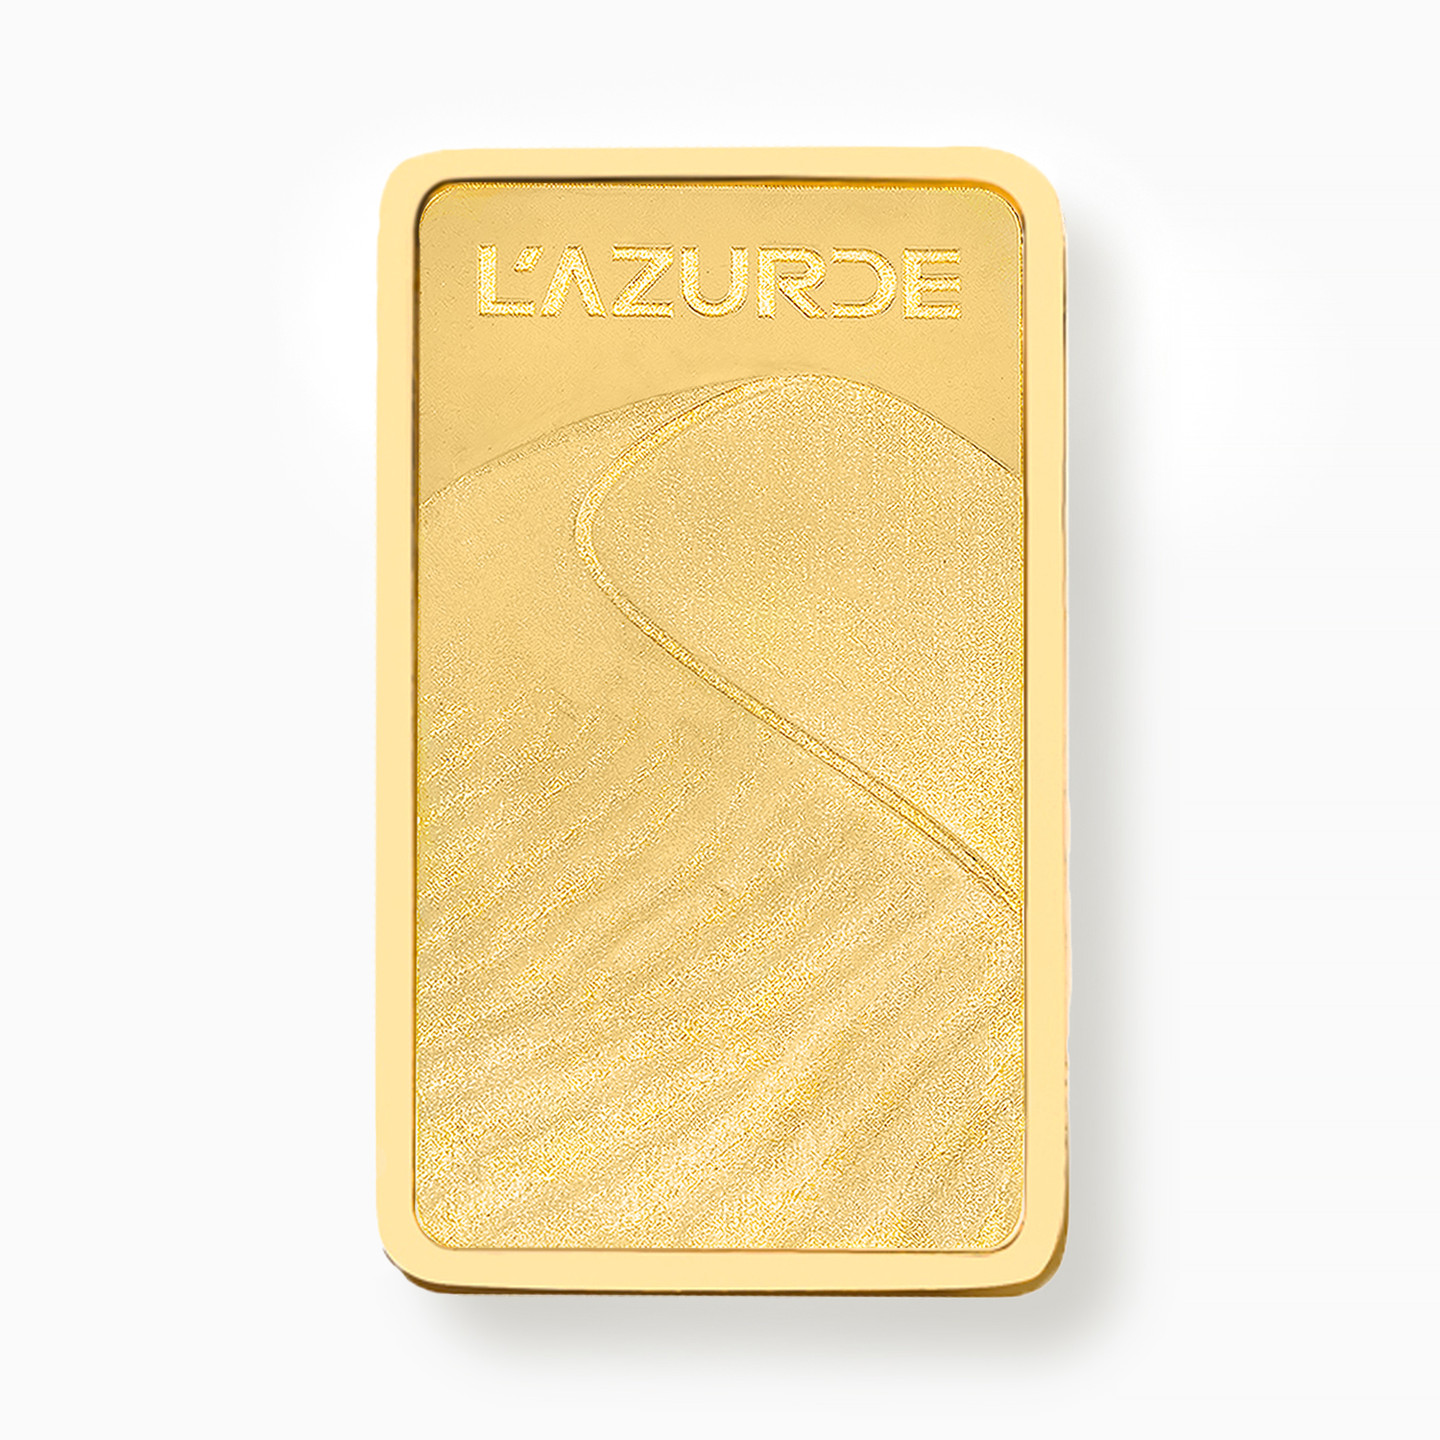 24K Gold Bar 5g - 2